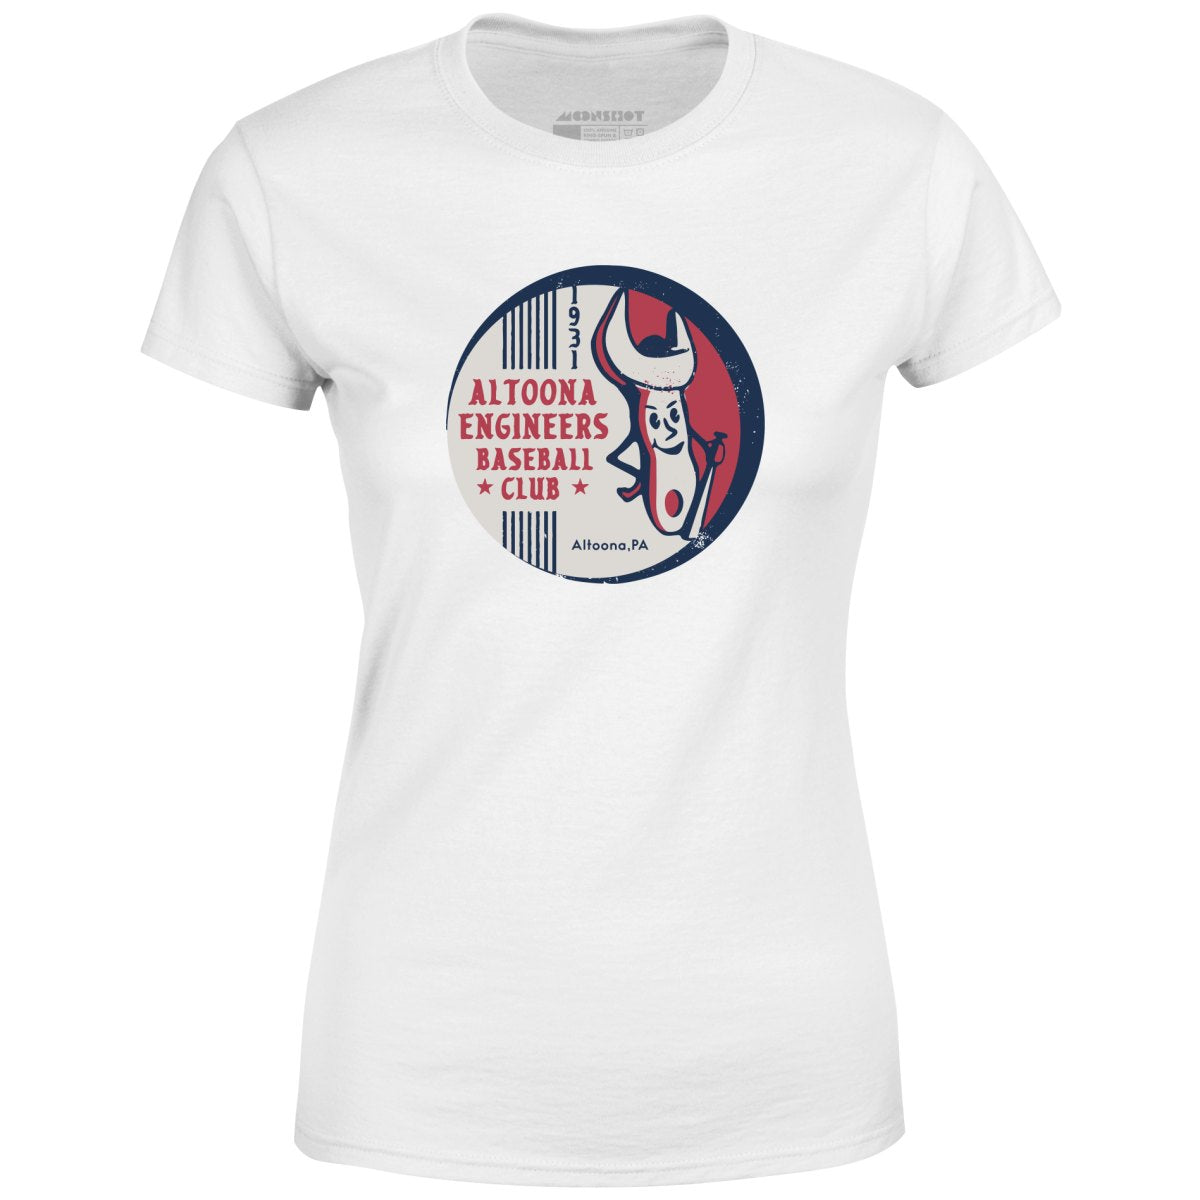 Altoona Engineers - Pennsylvania - Vintage Defunct Baseball Teams - Women's T-Shirt